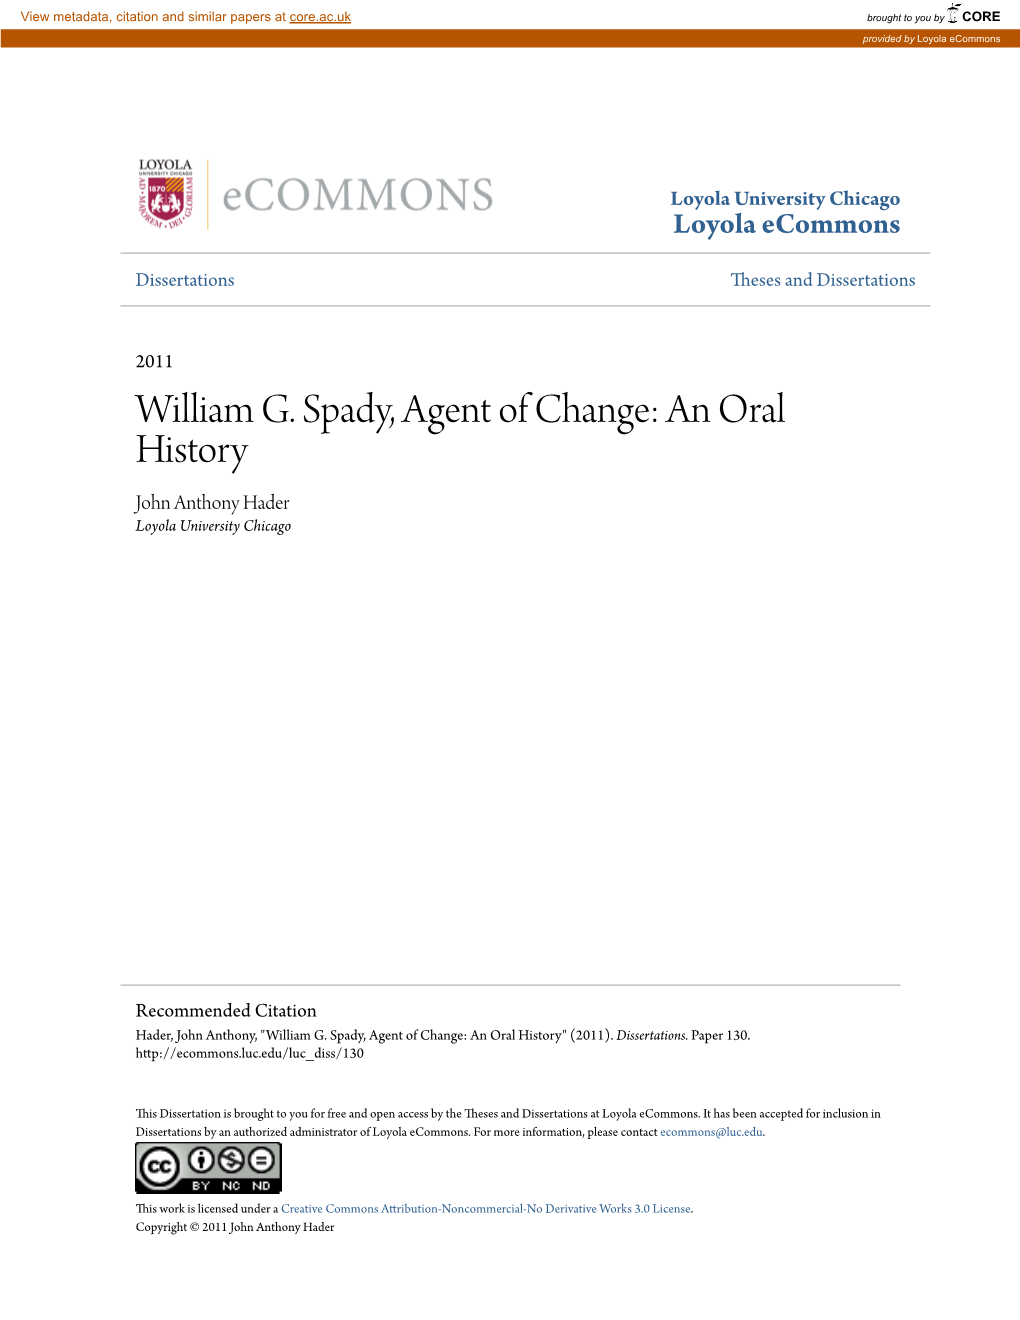 William G. Spady, Agent of Change: an Oral History John Anthony Hader Loyola University Chicago